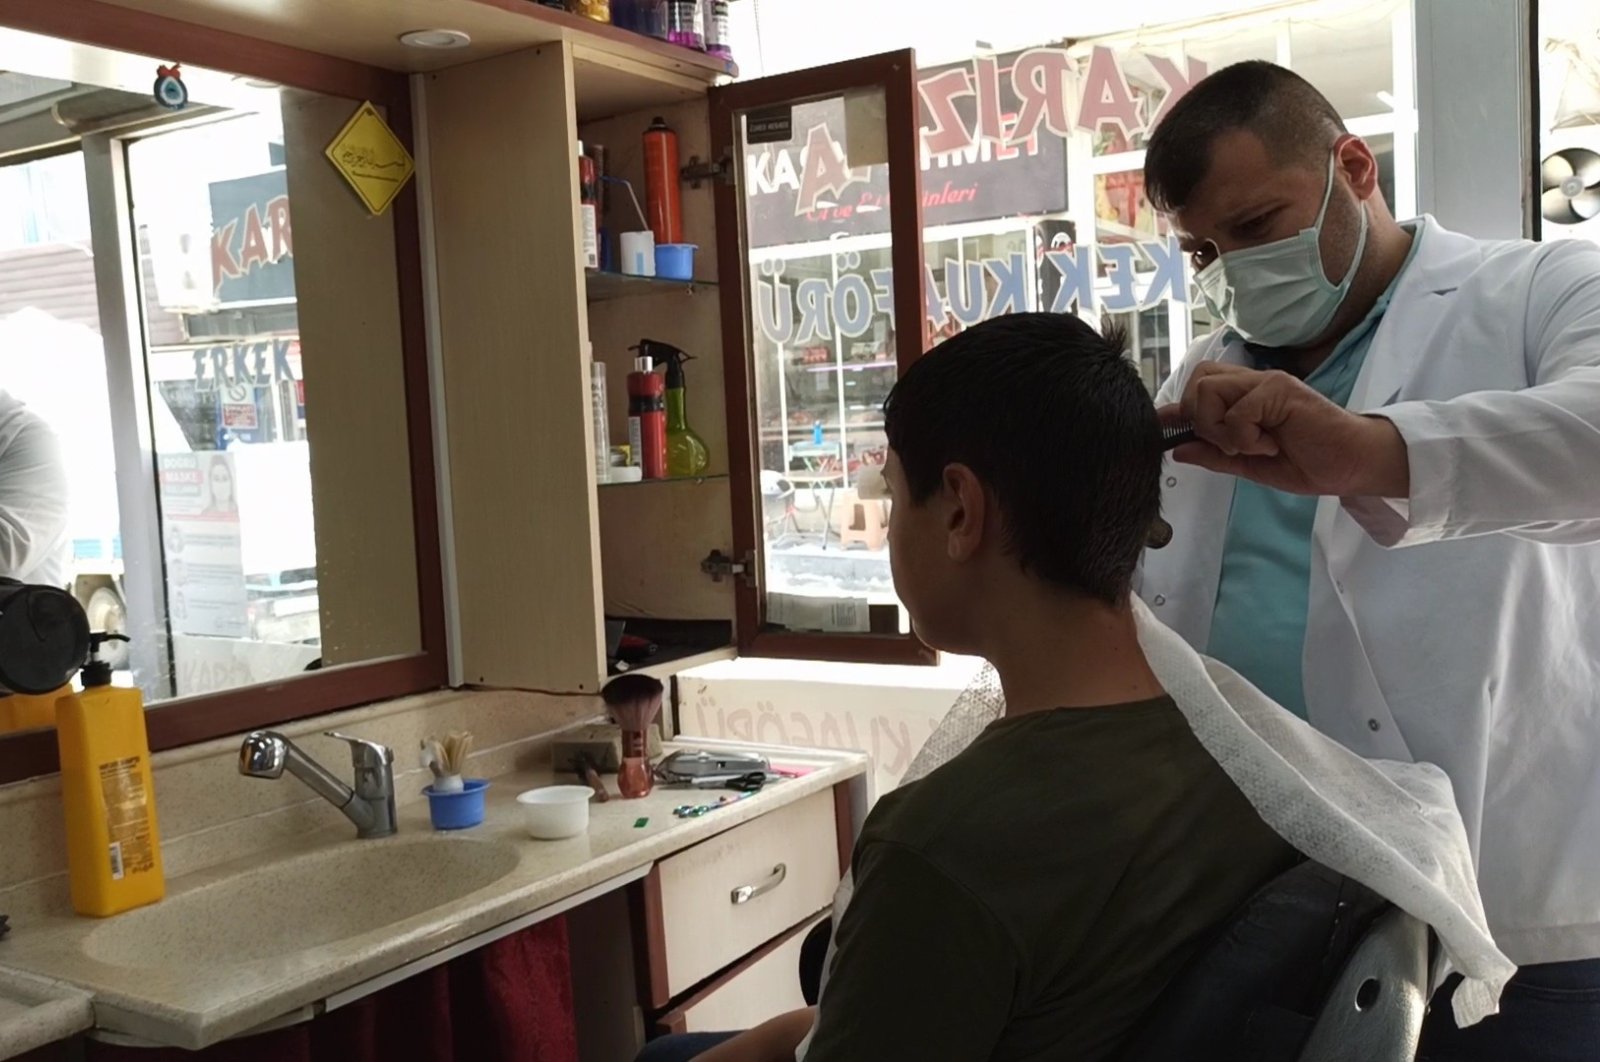 A barber cuts his customers' hair in a barbershop in the northwestern province of Edirne, Turkey, June 28, 2021. (IHA Photo)